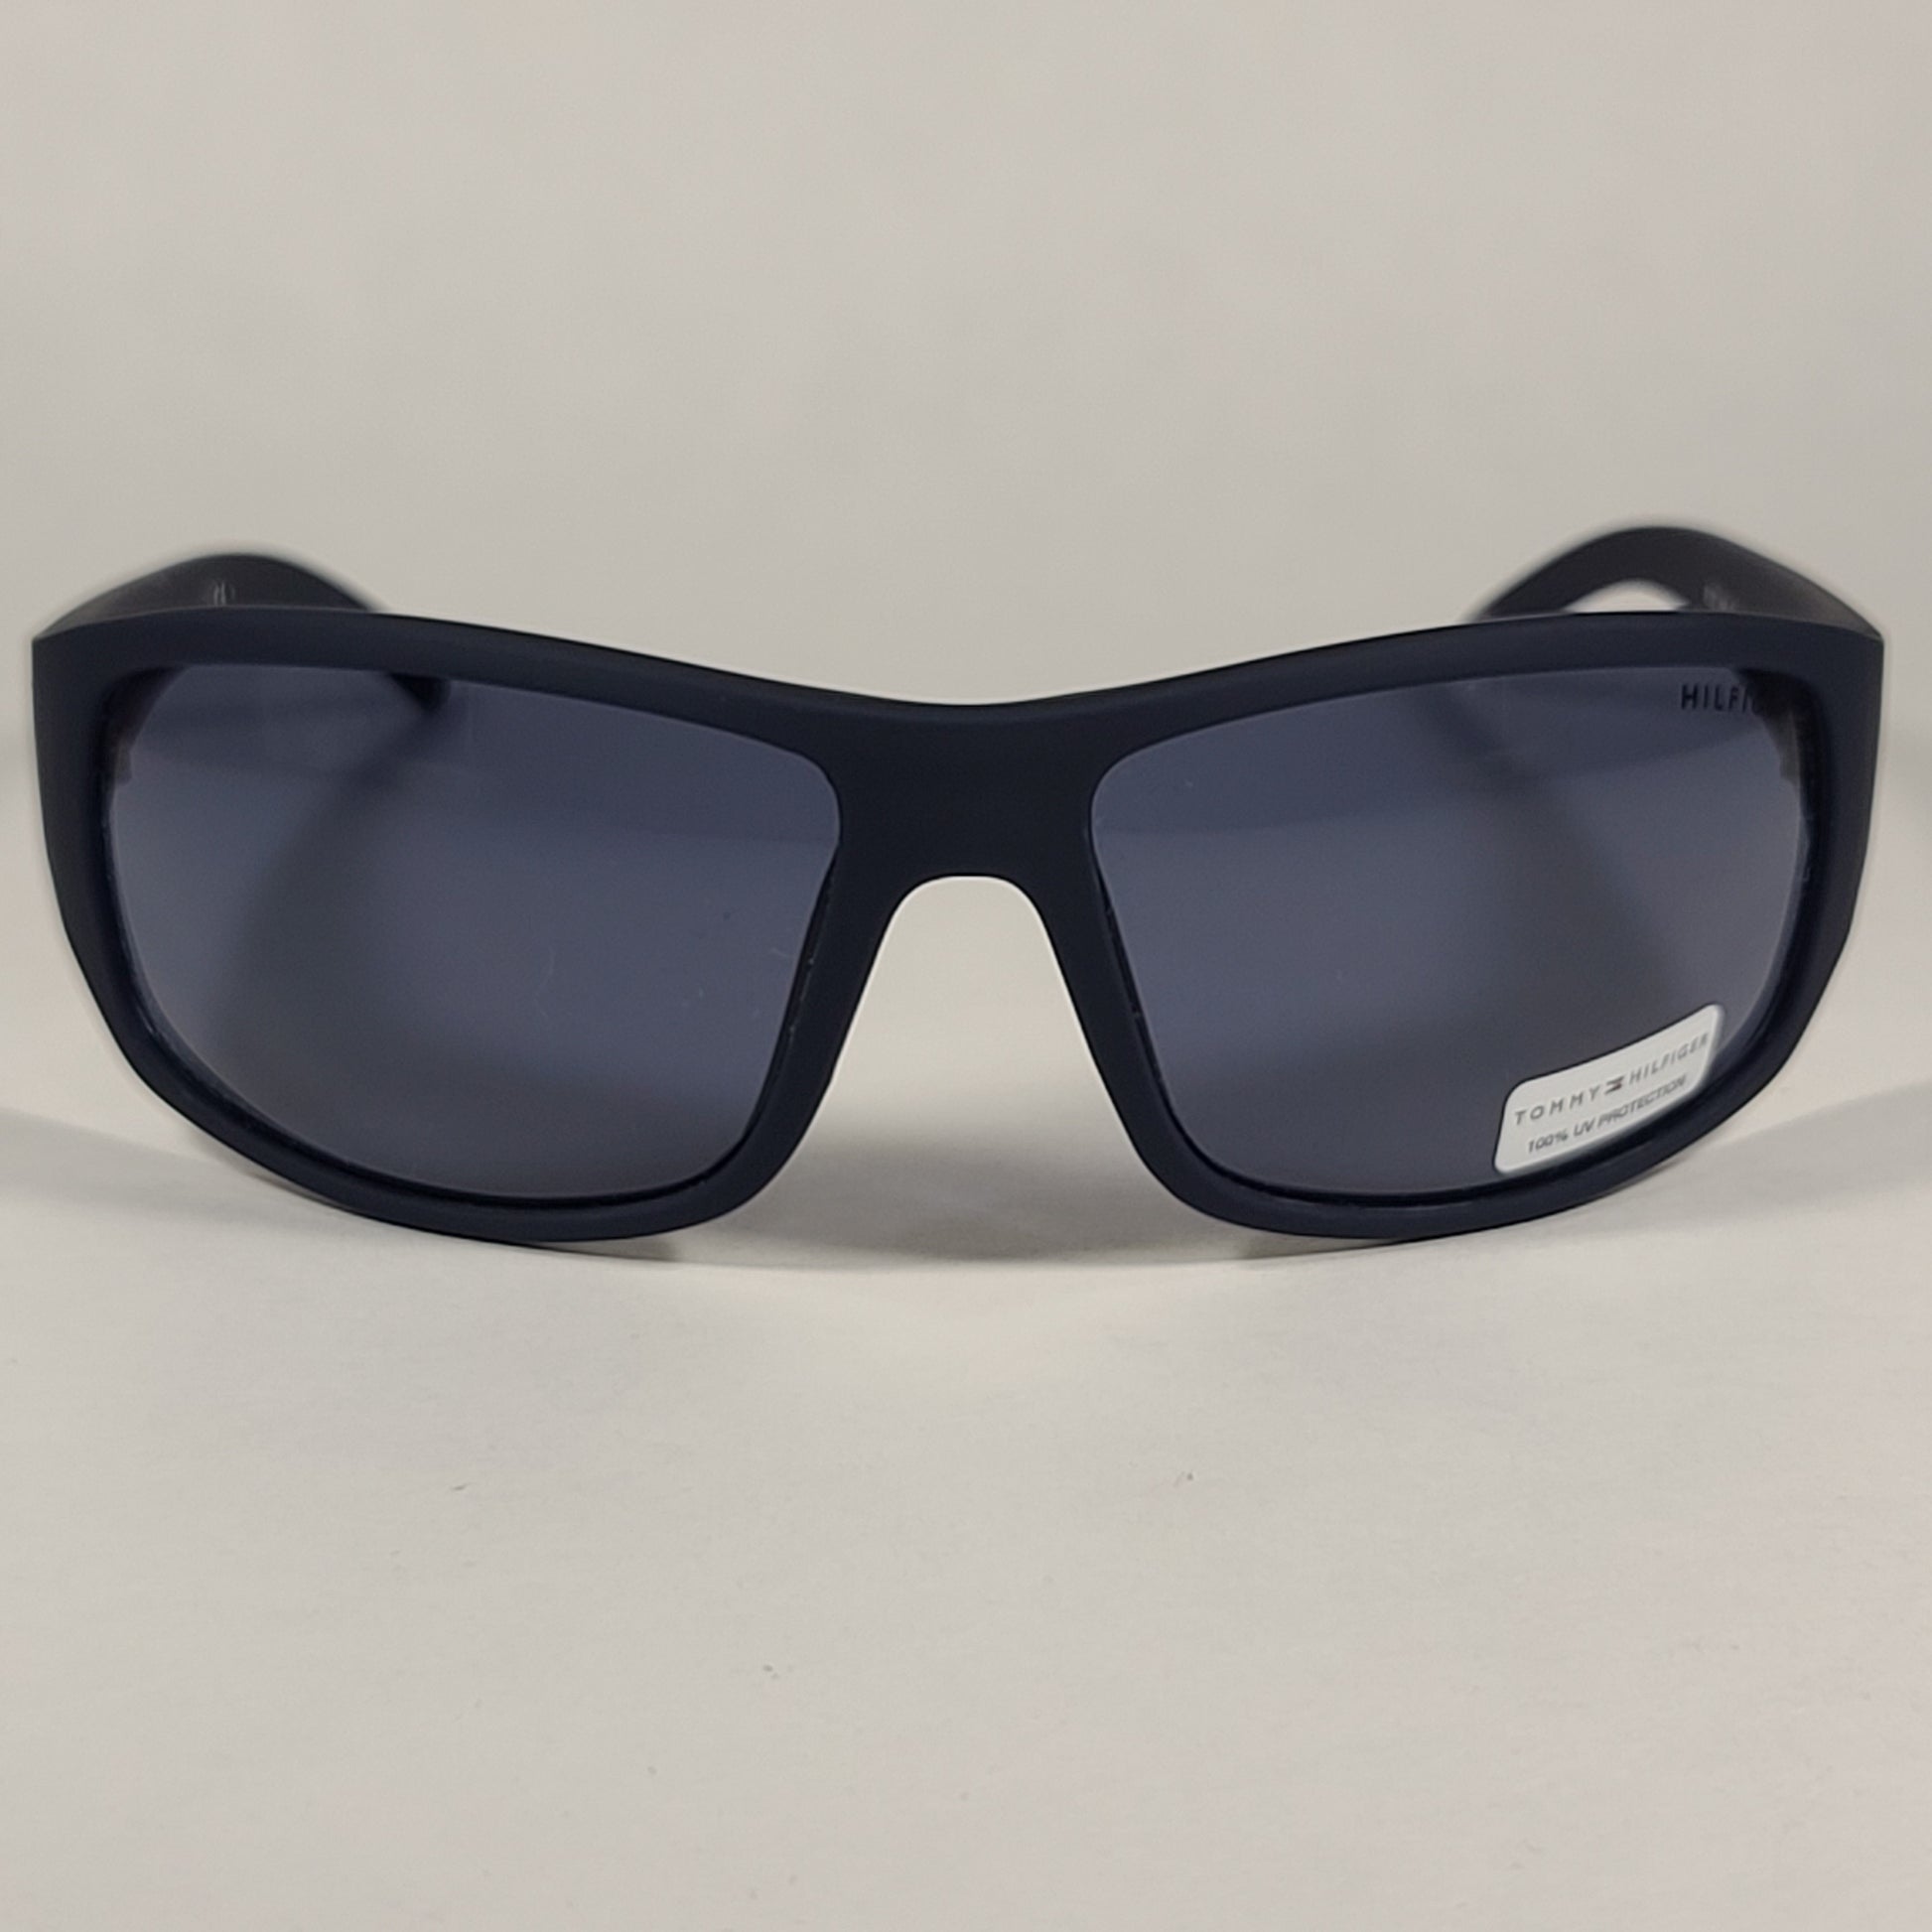 Tommy Hilfiger Bob Rectangular Wrap Sunglasses Sport Matte Navy Blue Gray Lens BOB MP OM497 - Sunglasses